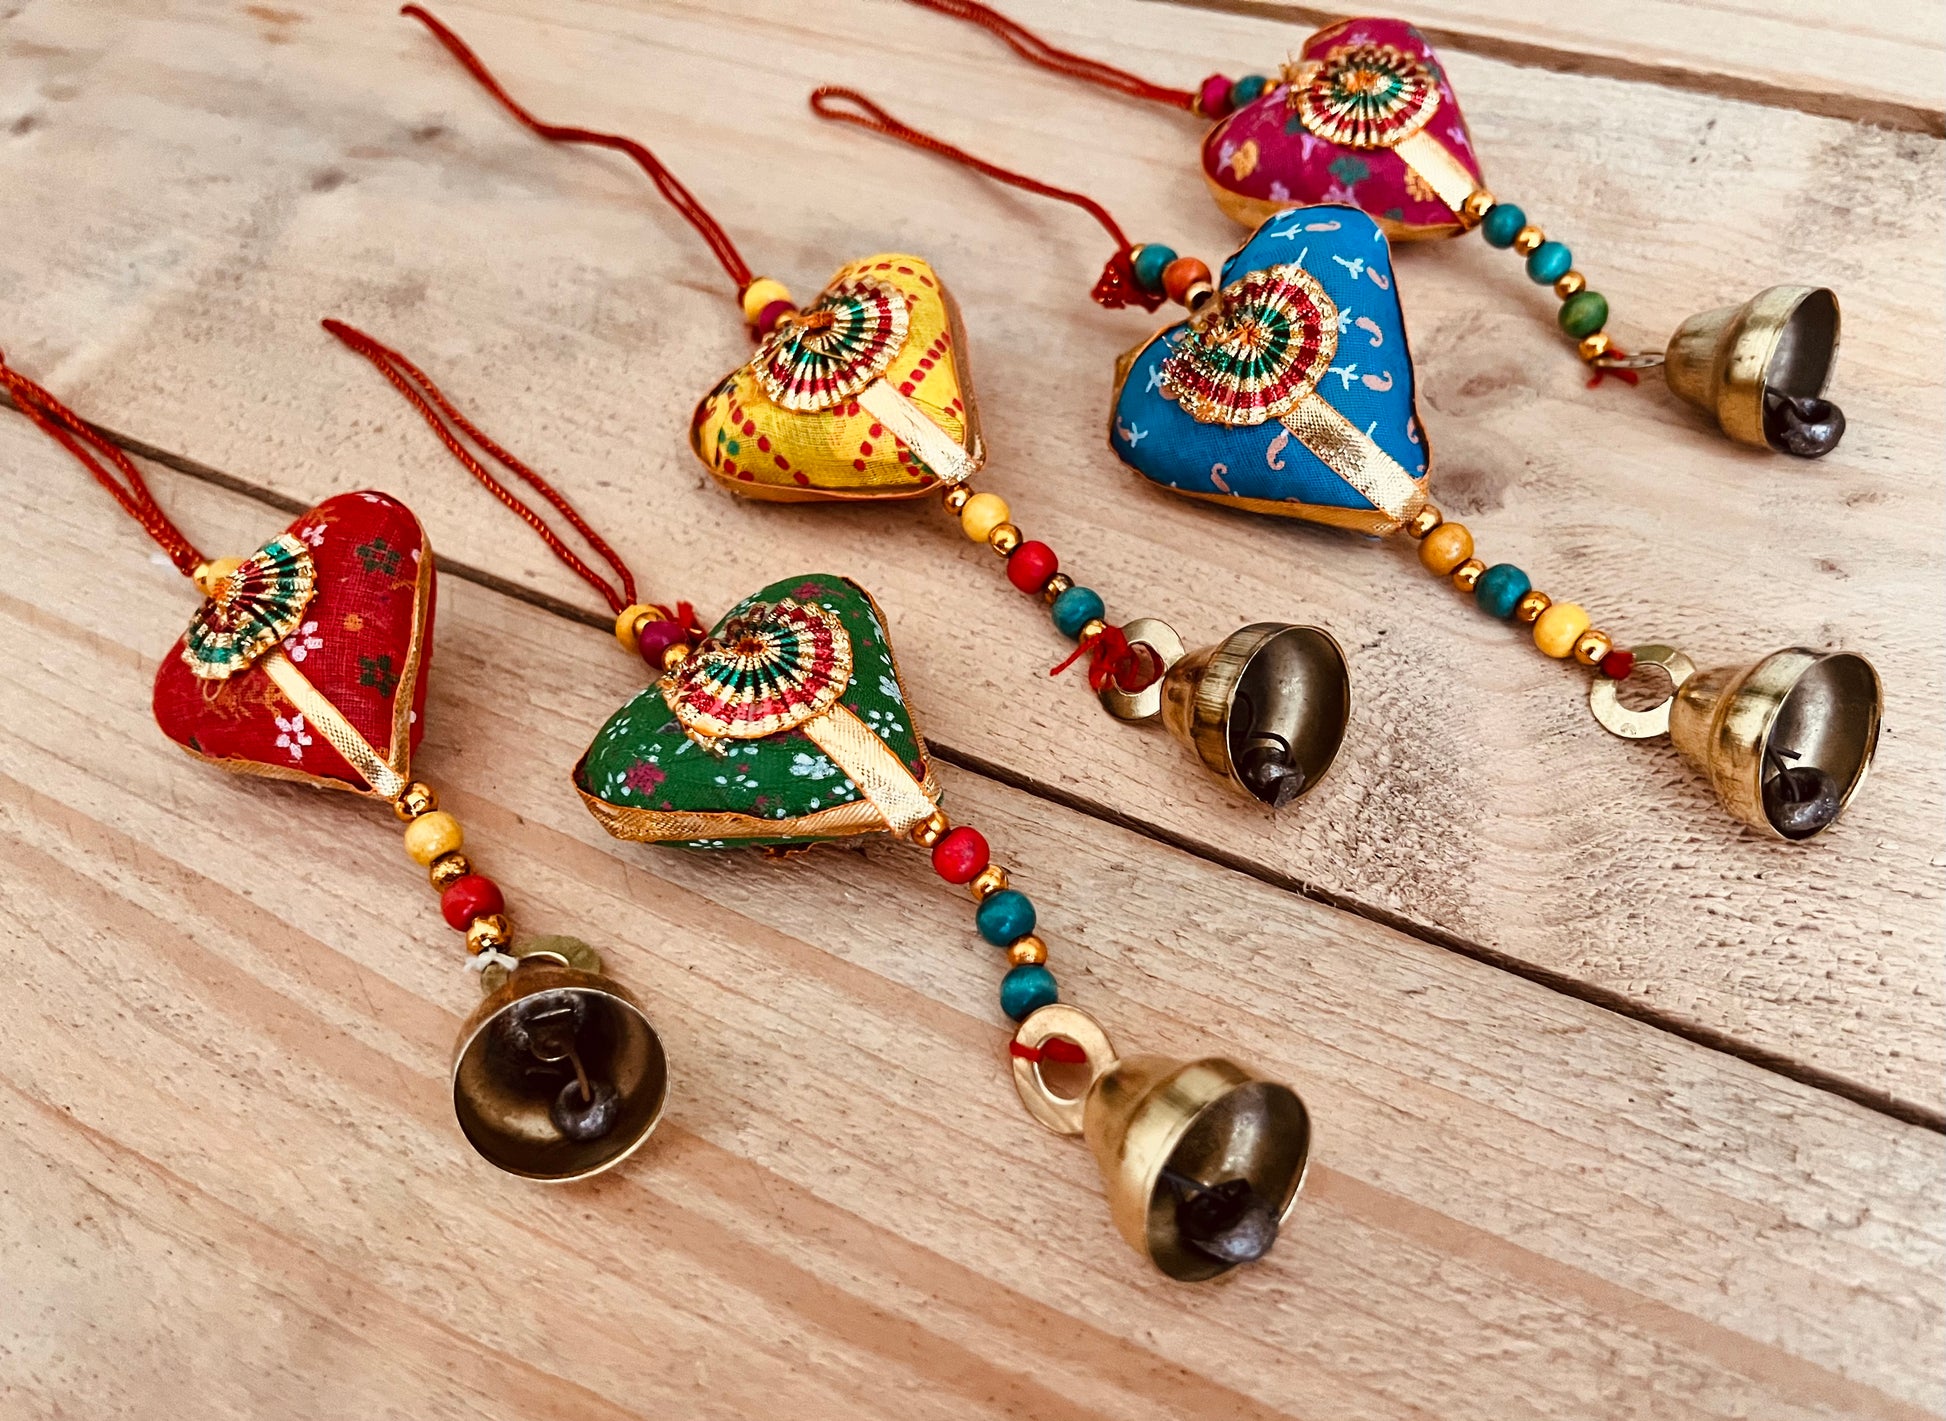 Handmade & Fair Trade Fabric Heart Bell In Recycled Sari Material Hippie Bohemian Decor